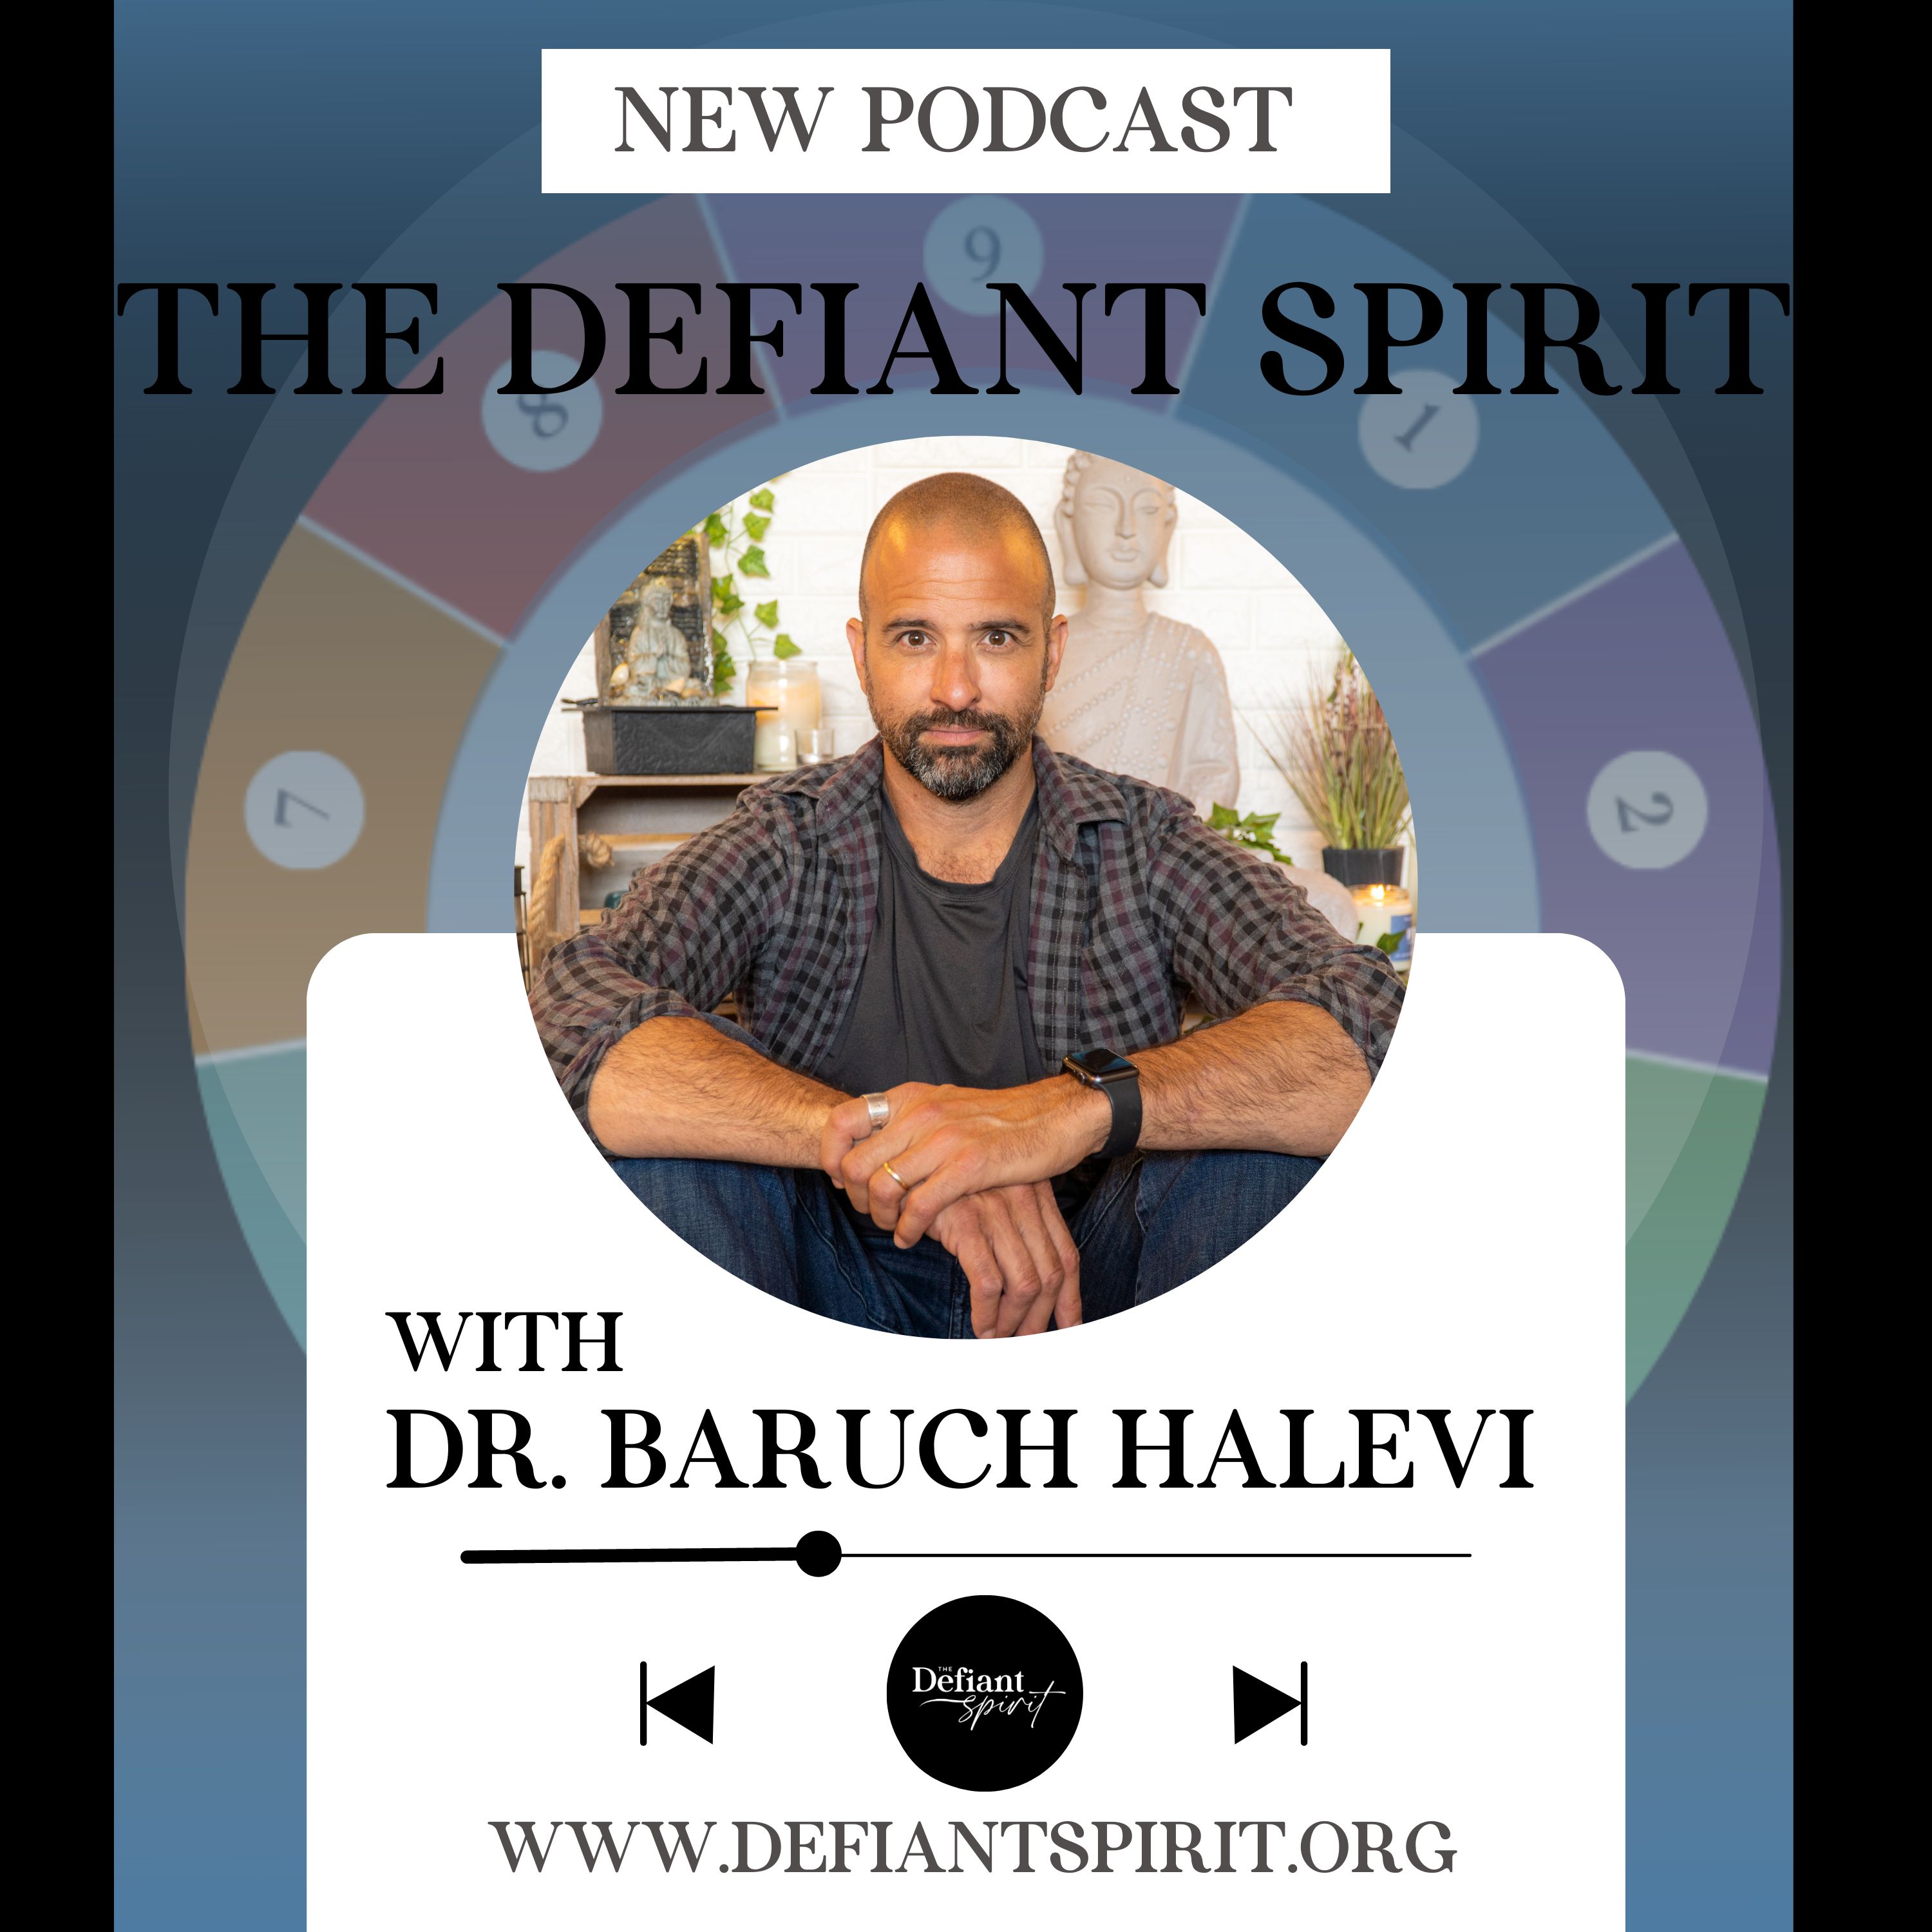 The Defiant Spirit Podcast